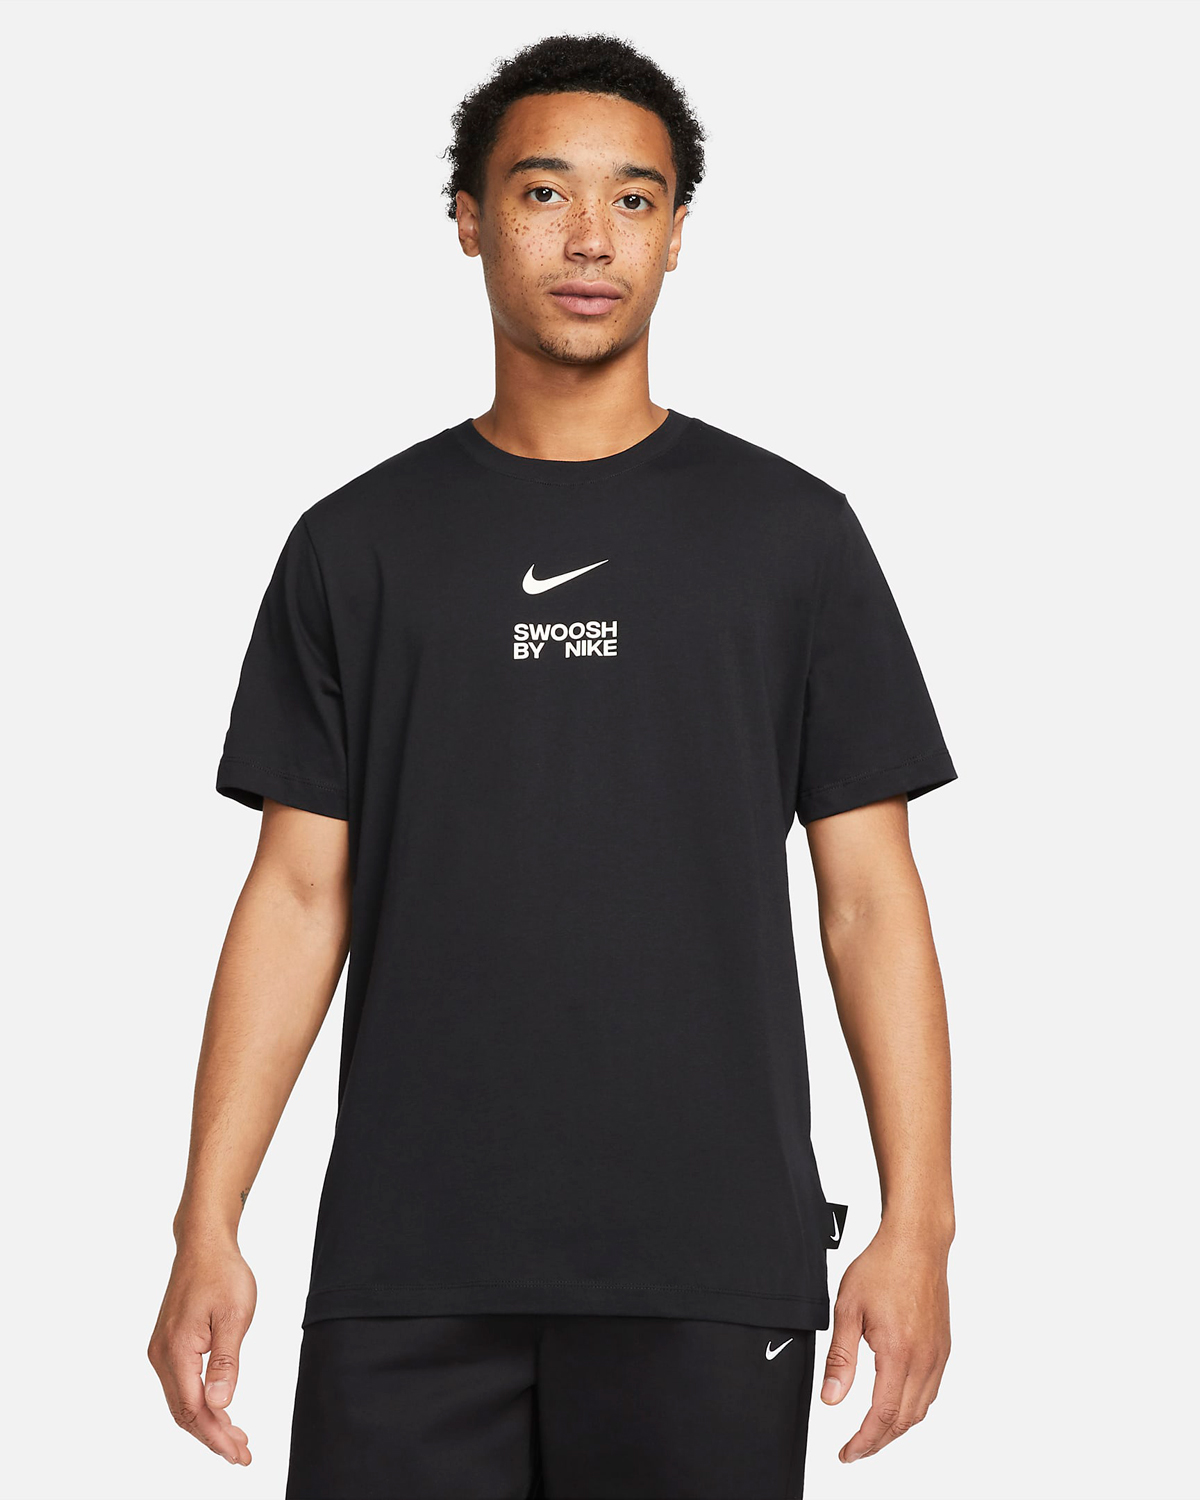 Nike-Sportswear-Swoosh-By-Nike-T-Shirt-Black-White